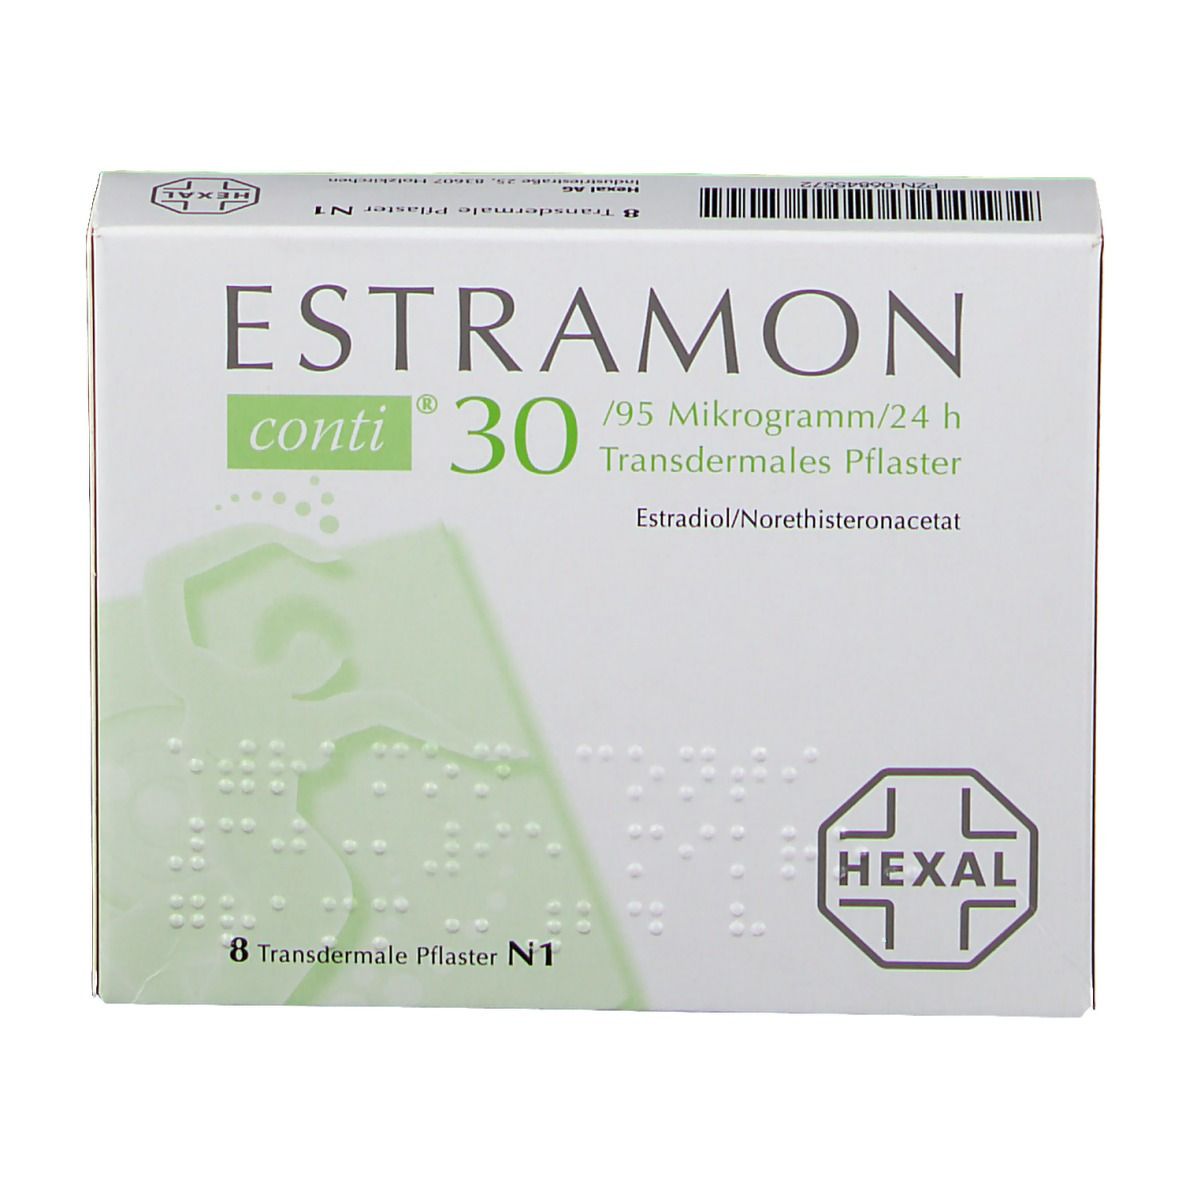 ESTRAMON conti® 30/95 µg/24 Stunden